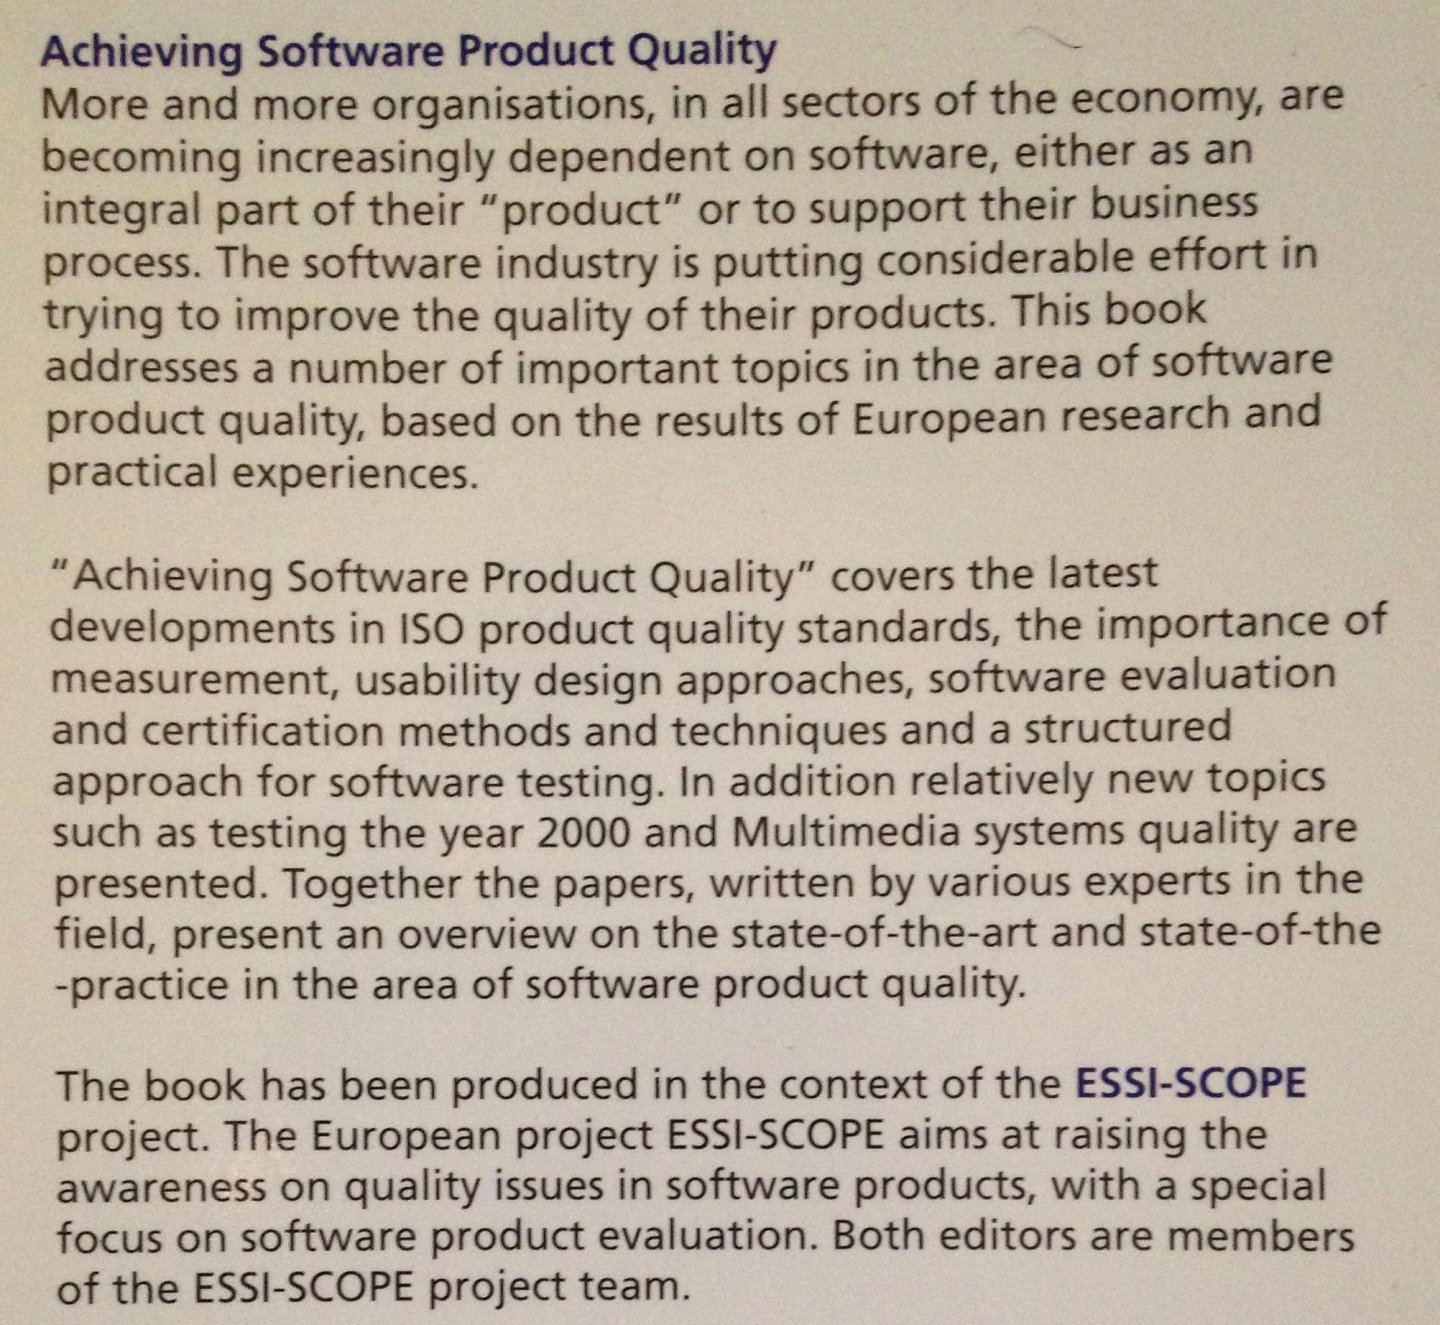 Veenendaal, Erik van & Julie McMullan (eds.) - Achieving Software Product Quality